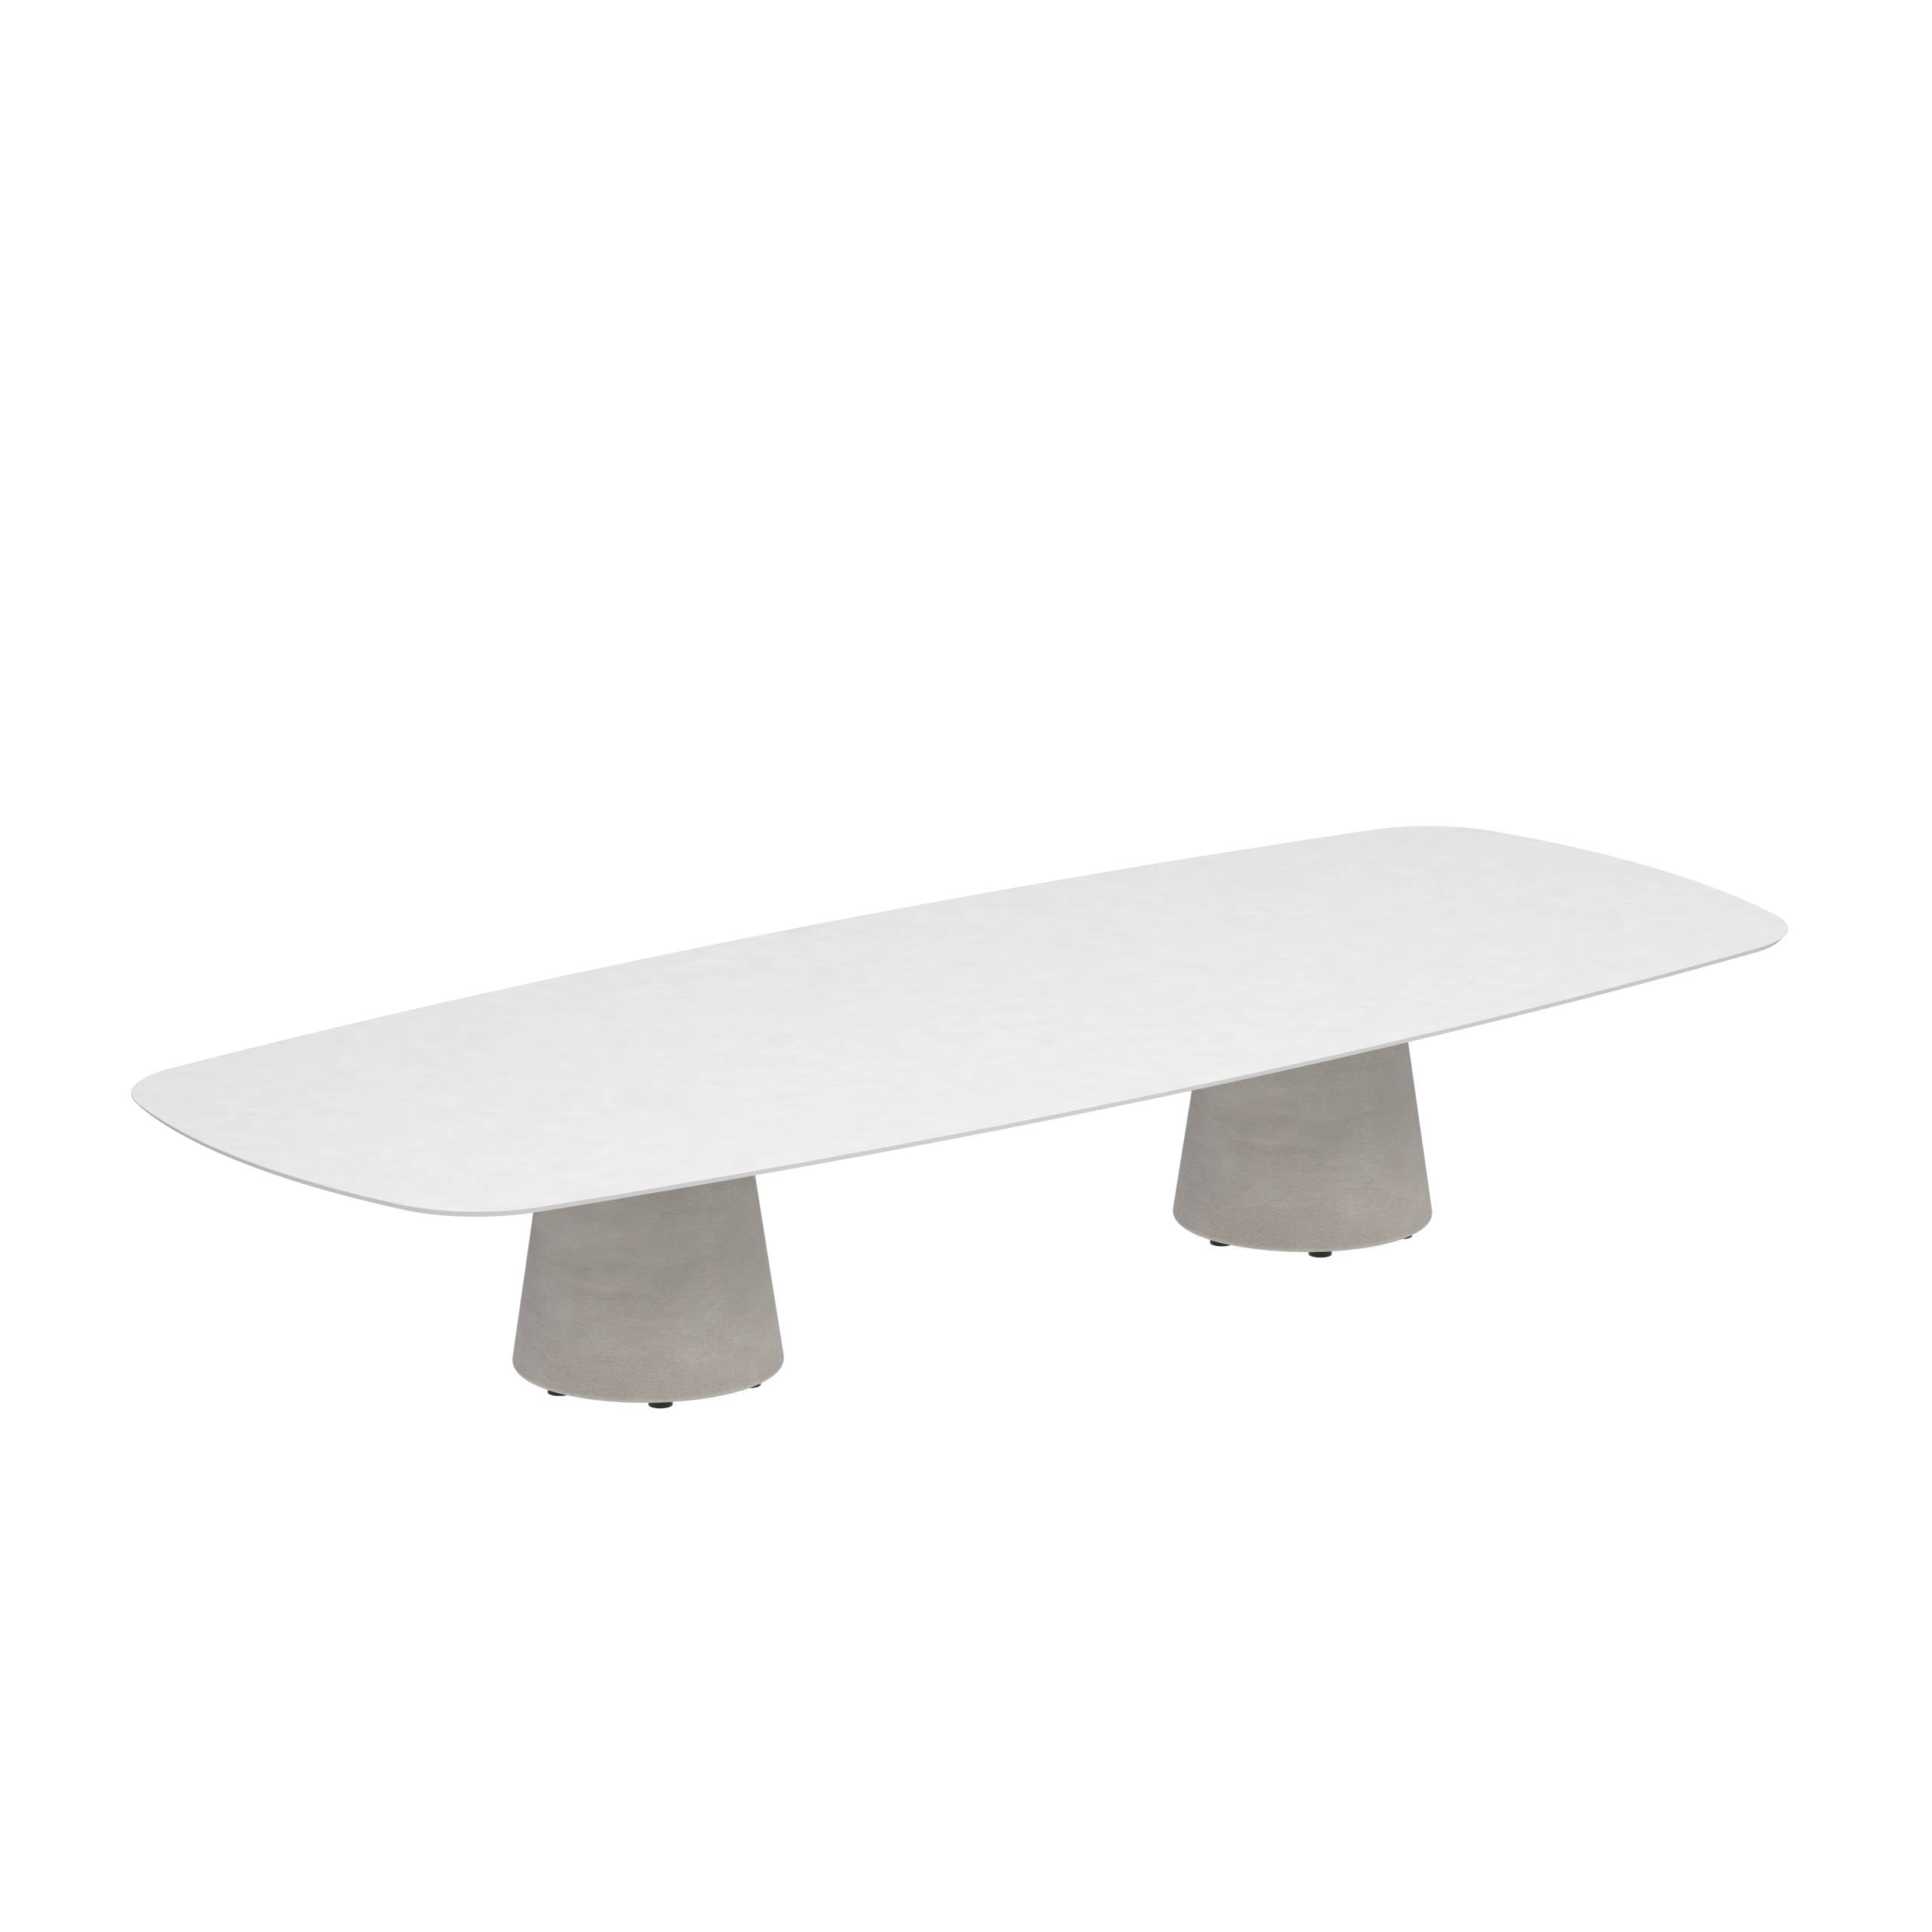 Conix Table 300x120 Cm High Lounge Legs Concrete Cement Grey - Table Top Ceramic White